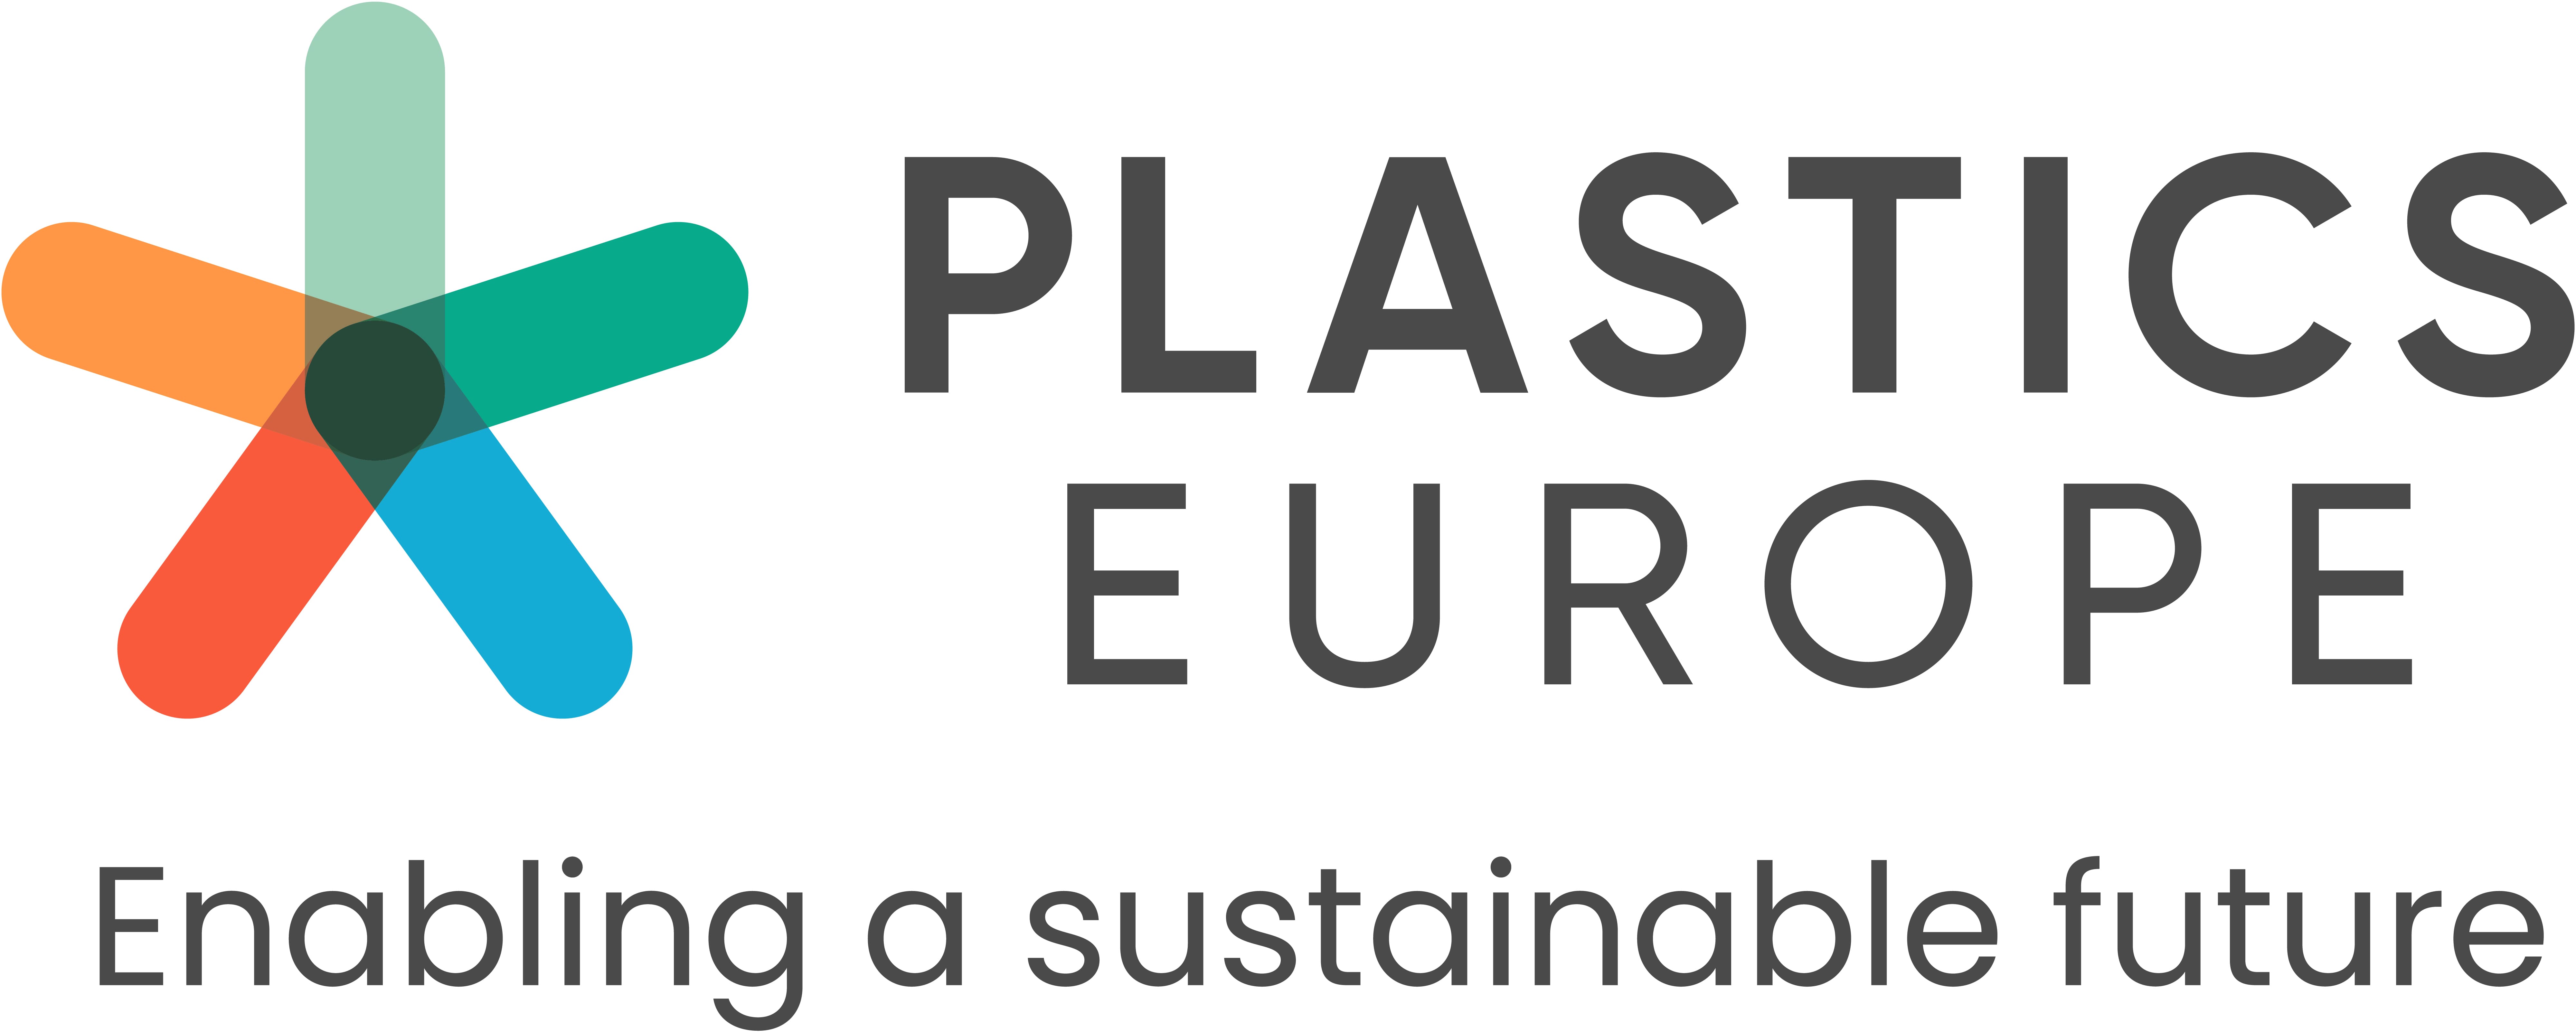 logo plasticseurope